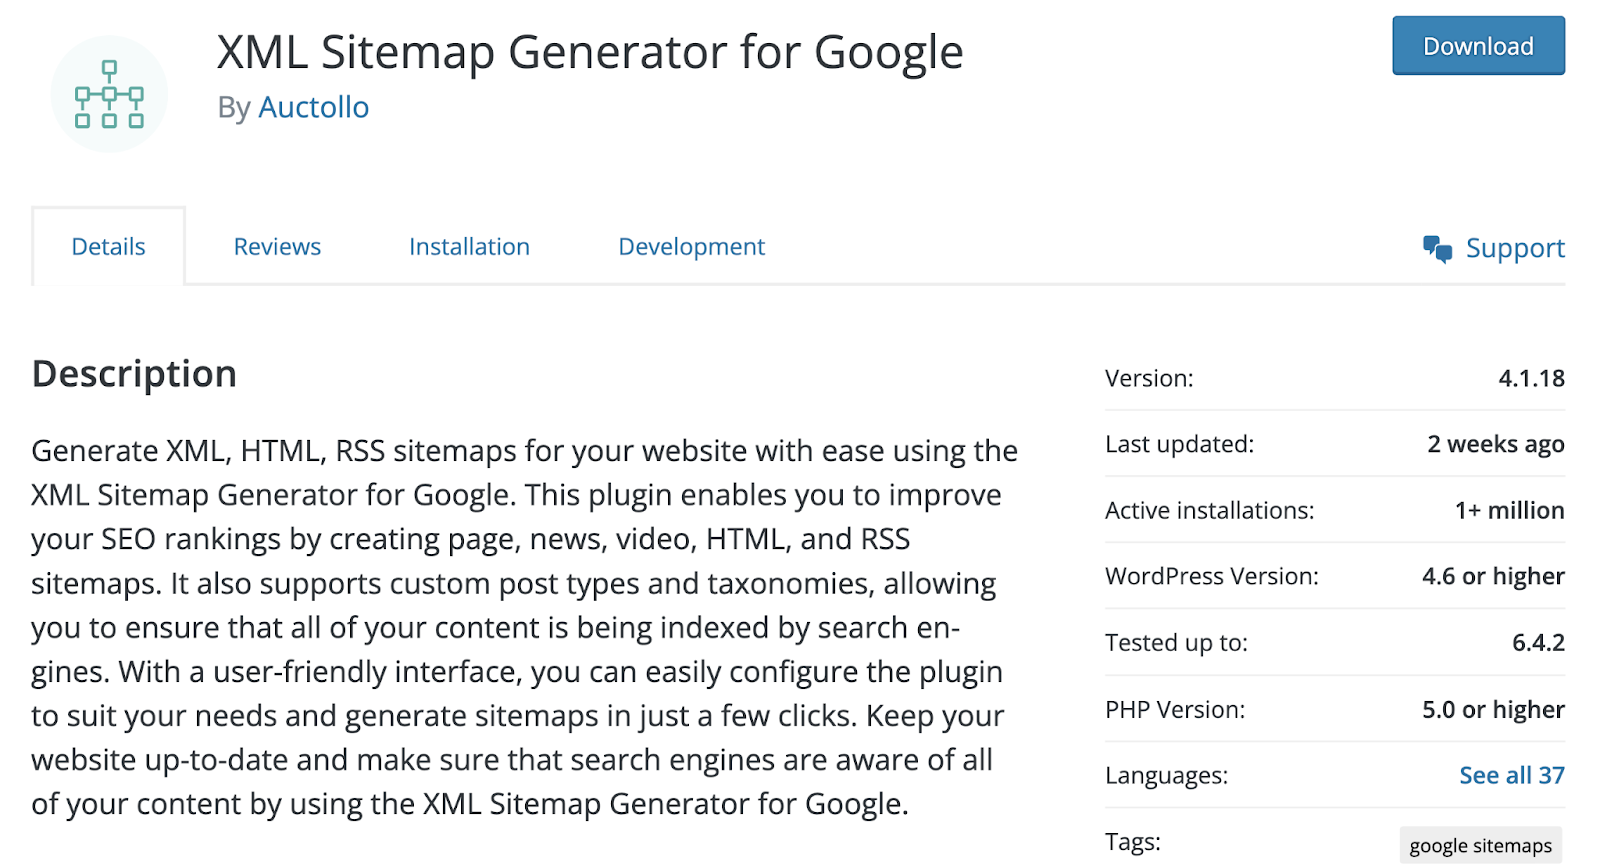 XML Sitemap Generator for Google details